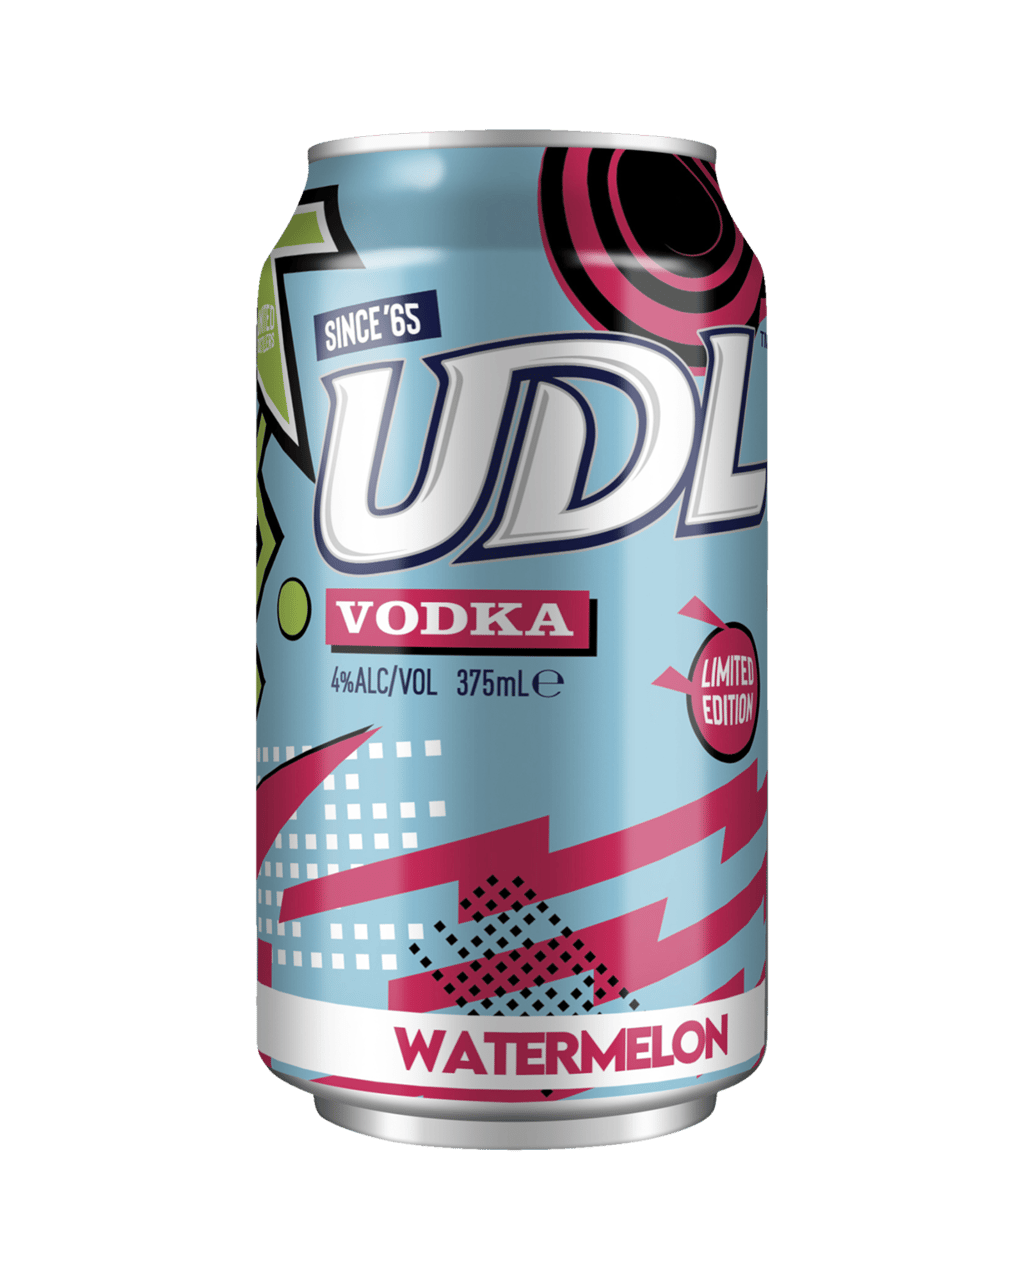 UDL Range of pre-mix spirits